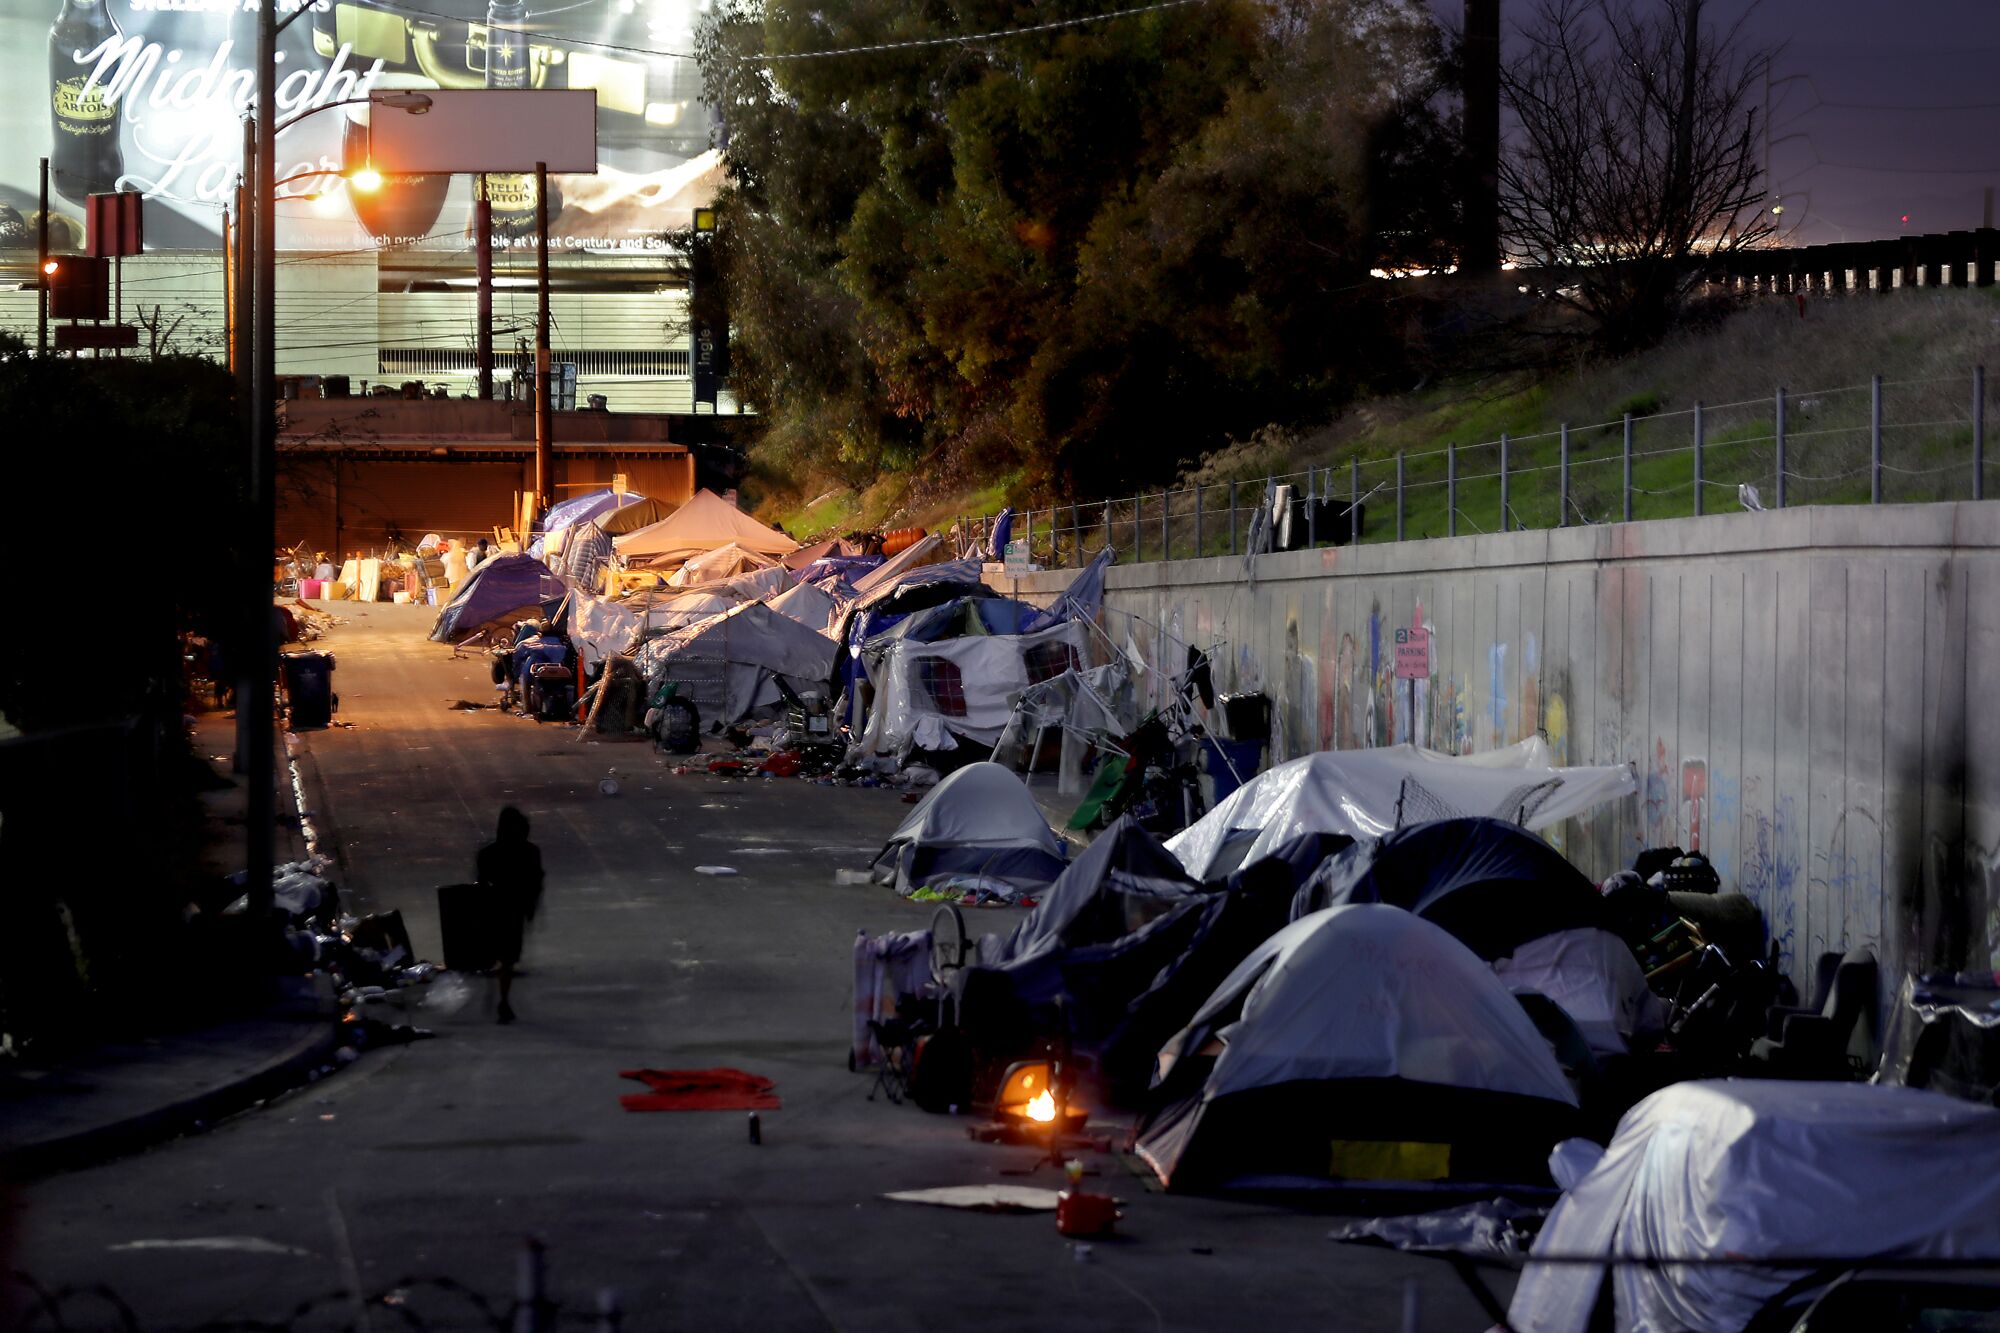 A homeless encampment near Los Angeles International Airport. 